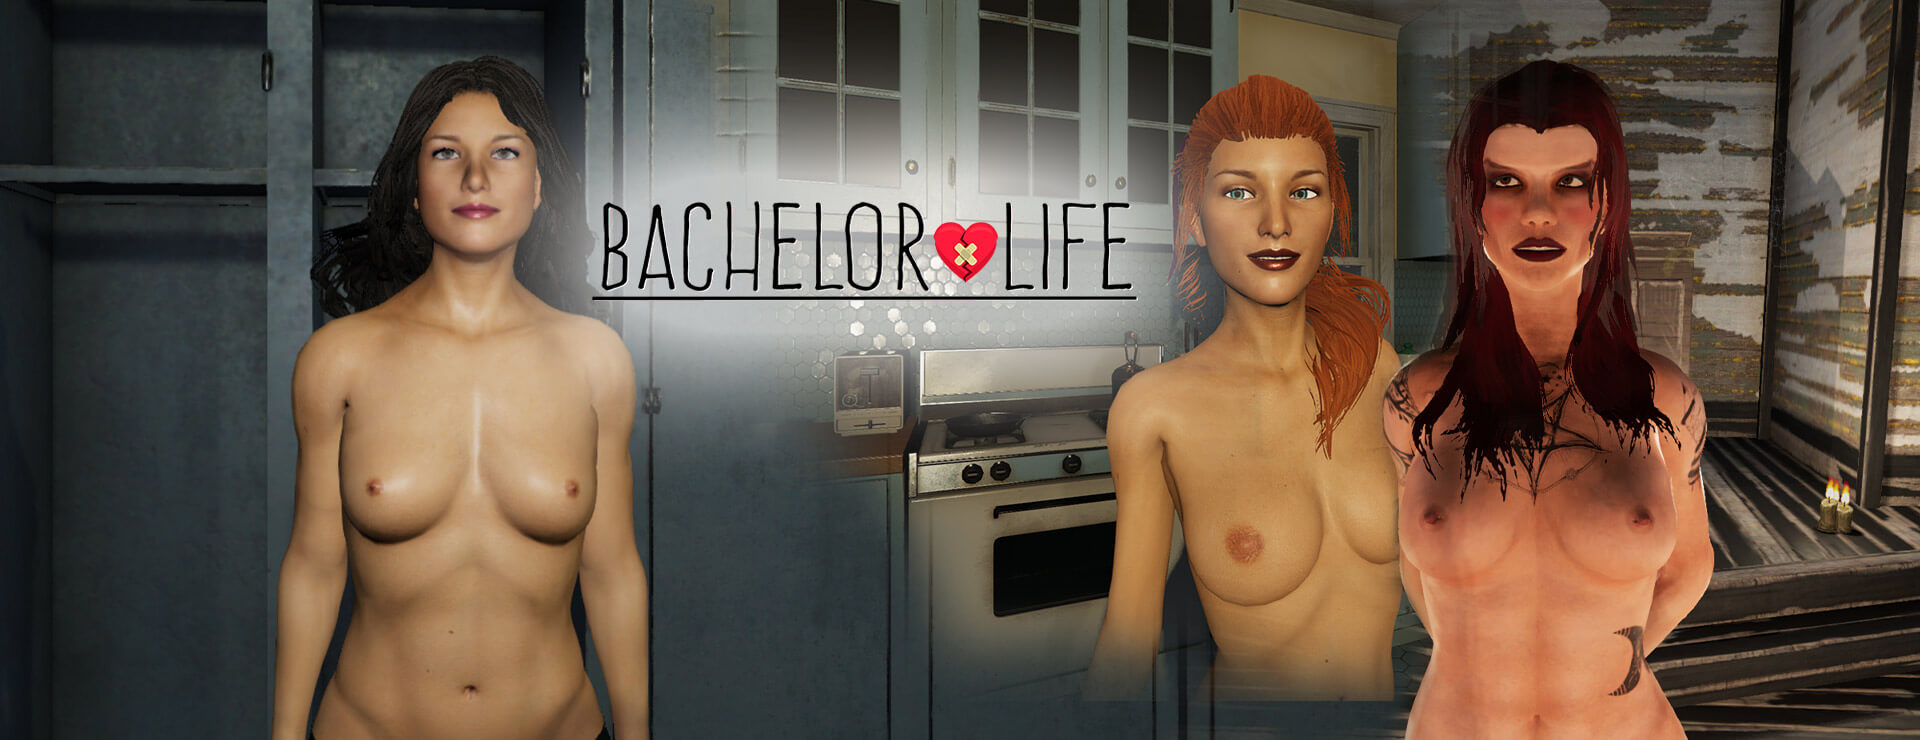 Bachelor Life - シミュレーション ゲーム